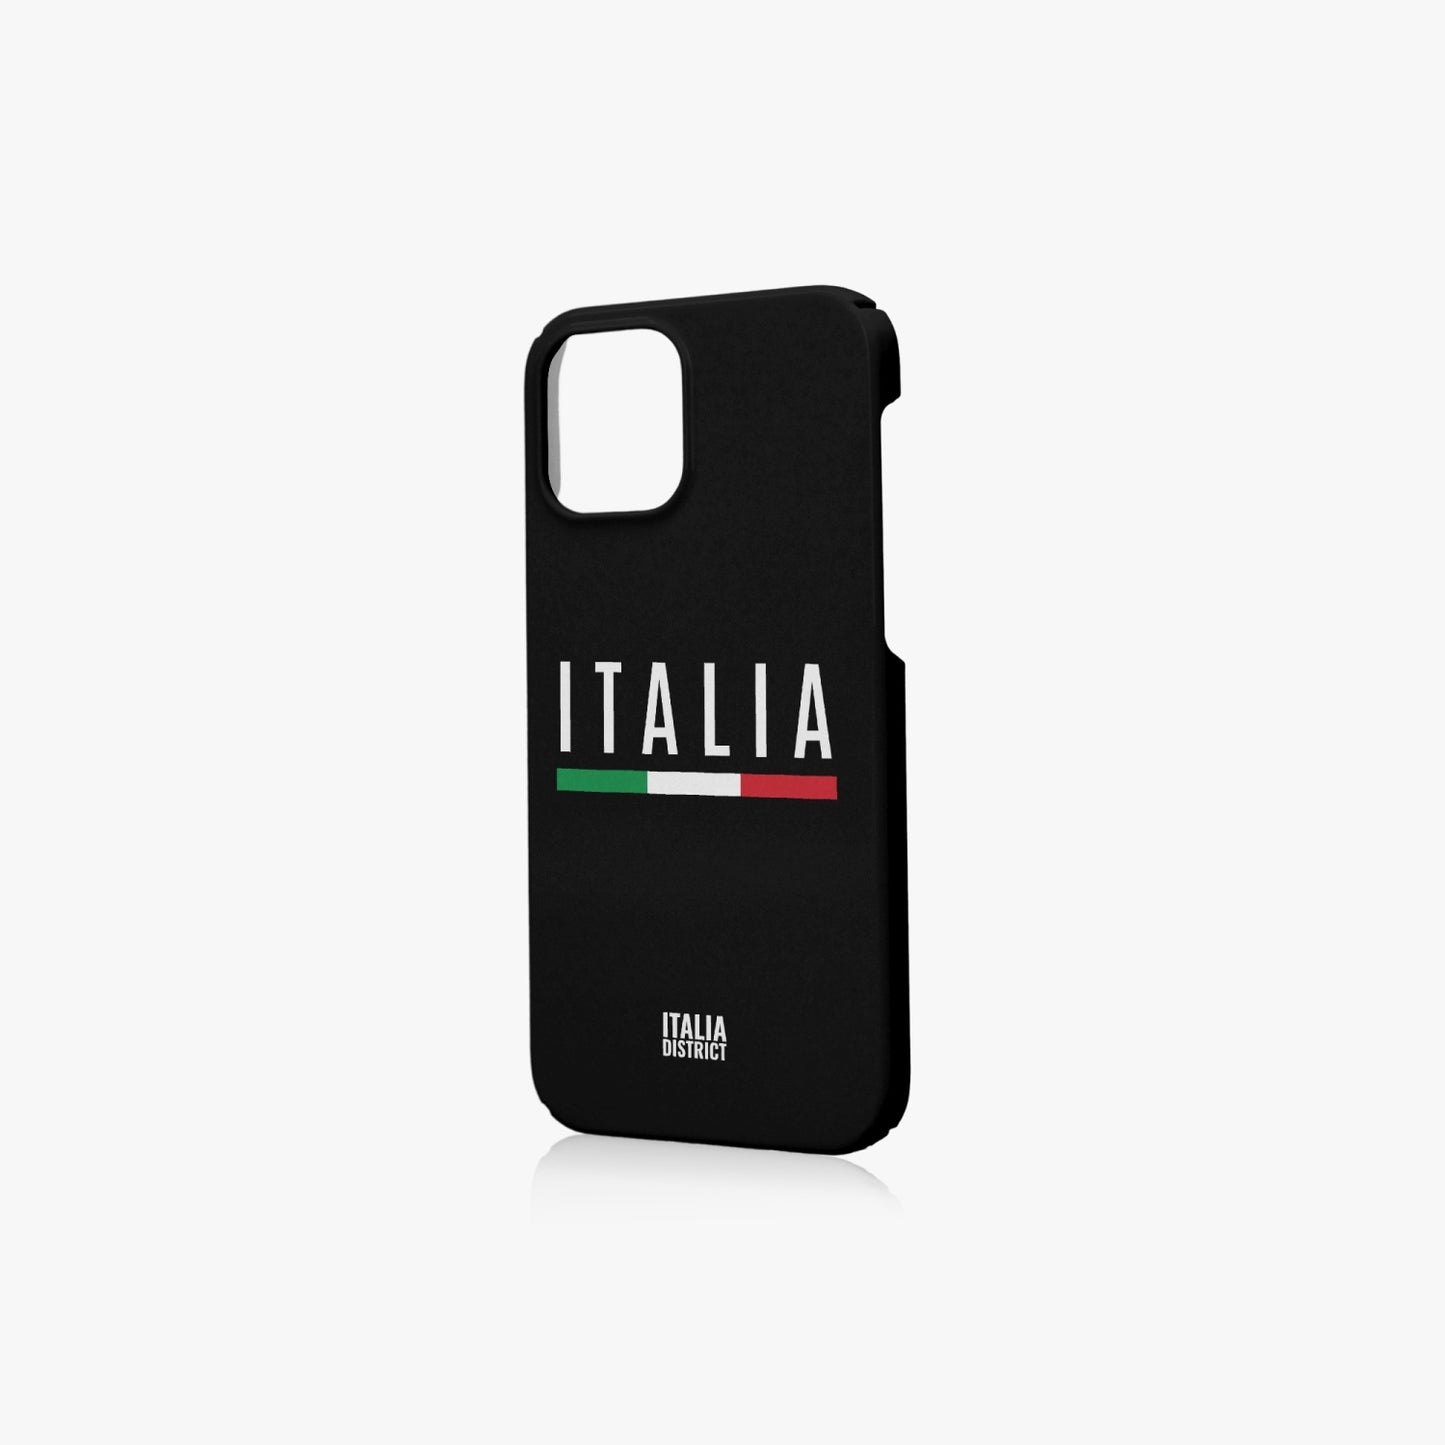 Italy Black Phone Case iPhone 12 mini